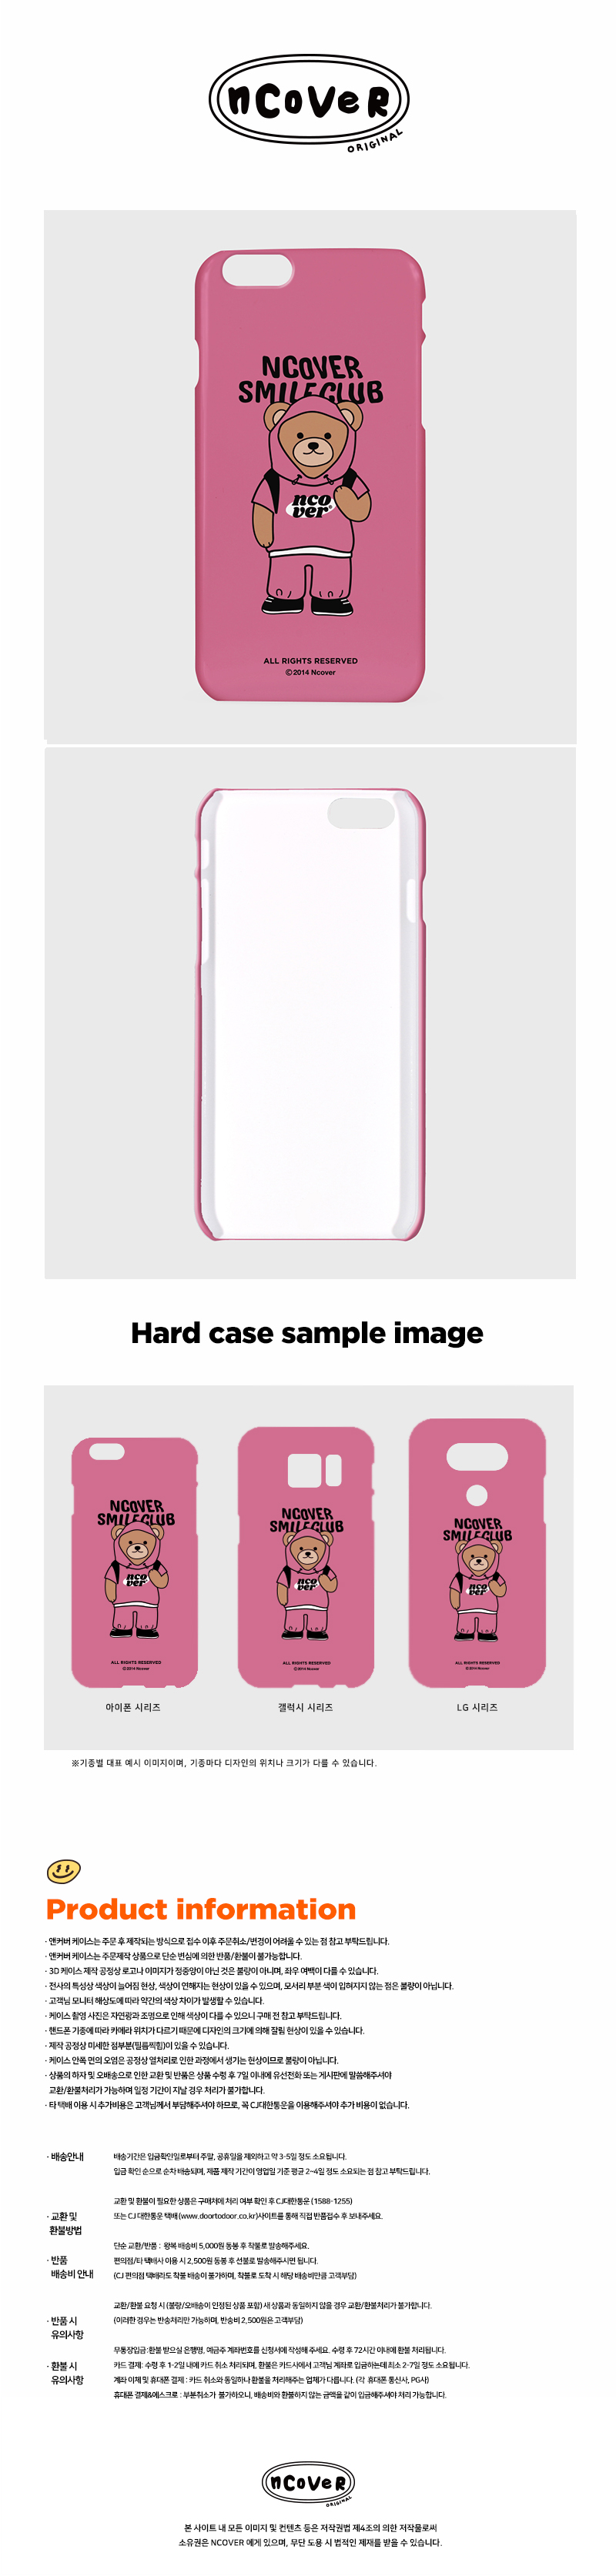  Hoodie bruin-pink(hard)  19,000원 - 바이인터내셔널주식회사 디지털, 모바일 액세서리, 휴대폰 케이스, 기타 스마트폰 바보사랑  Hoodie bruin-pink(hard)  19,000원 - 바이인터내셔널주식회사 디지털, 모바일 액세서리, 휴대폰 케이스, 기타 스마트폰 바보사랑